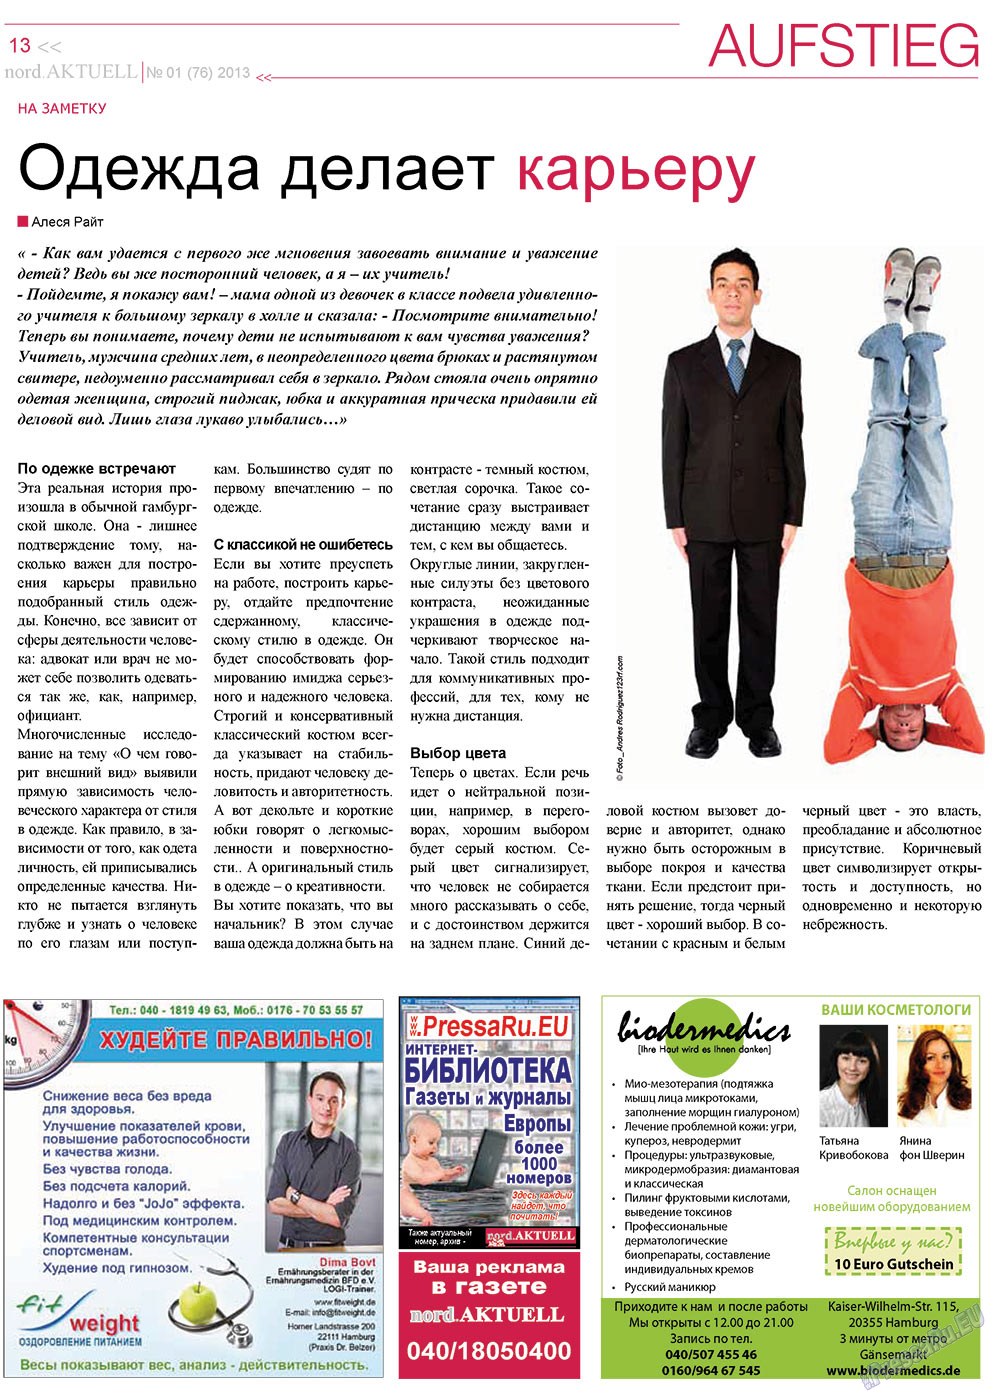 nord.Aktuell, газета. 2013 №1 стр.13